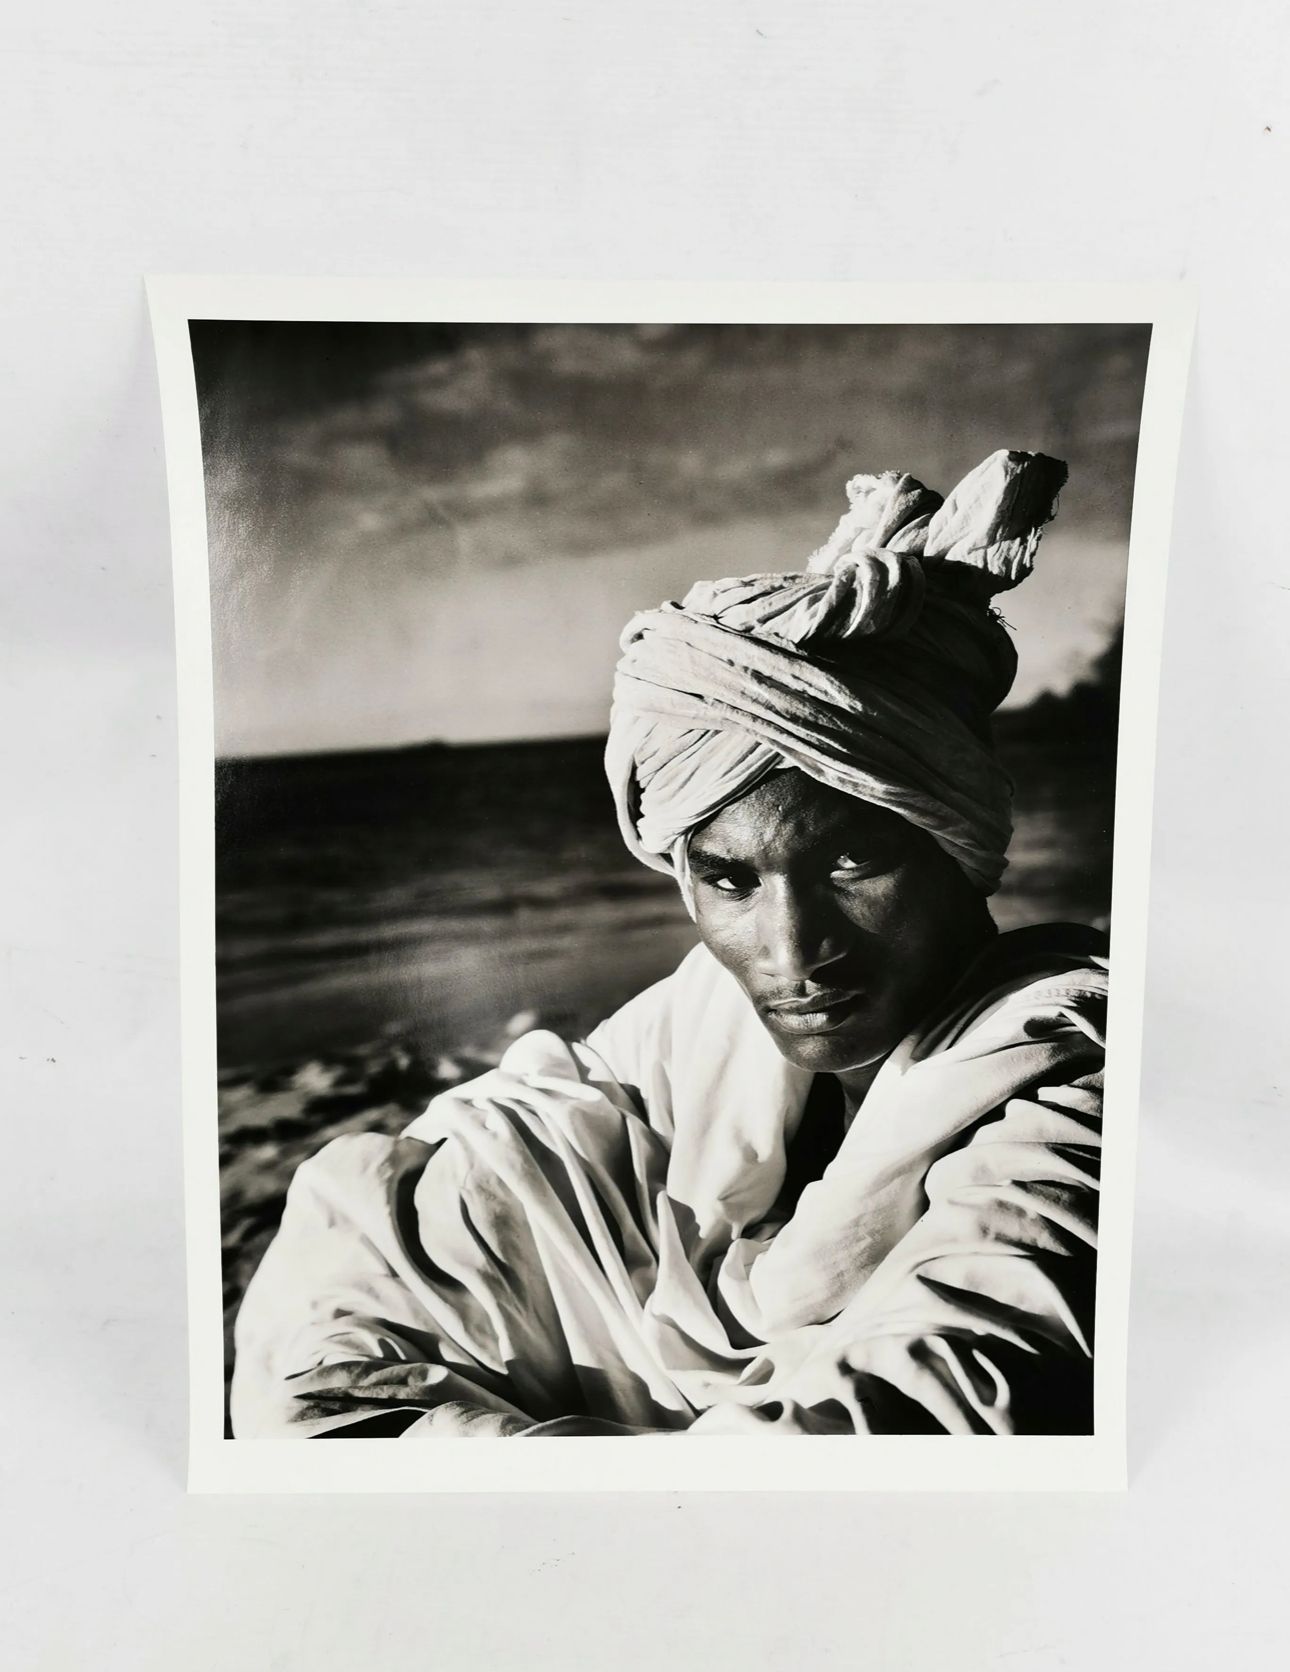 Null 吉安-保罗-巴比埃里（生于1938年）。戴头巾的男人。马达加斯加。黑白摄影作品，50 x 40厘米。从艺术家那里获得。